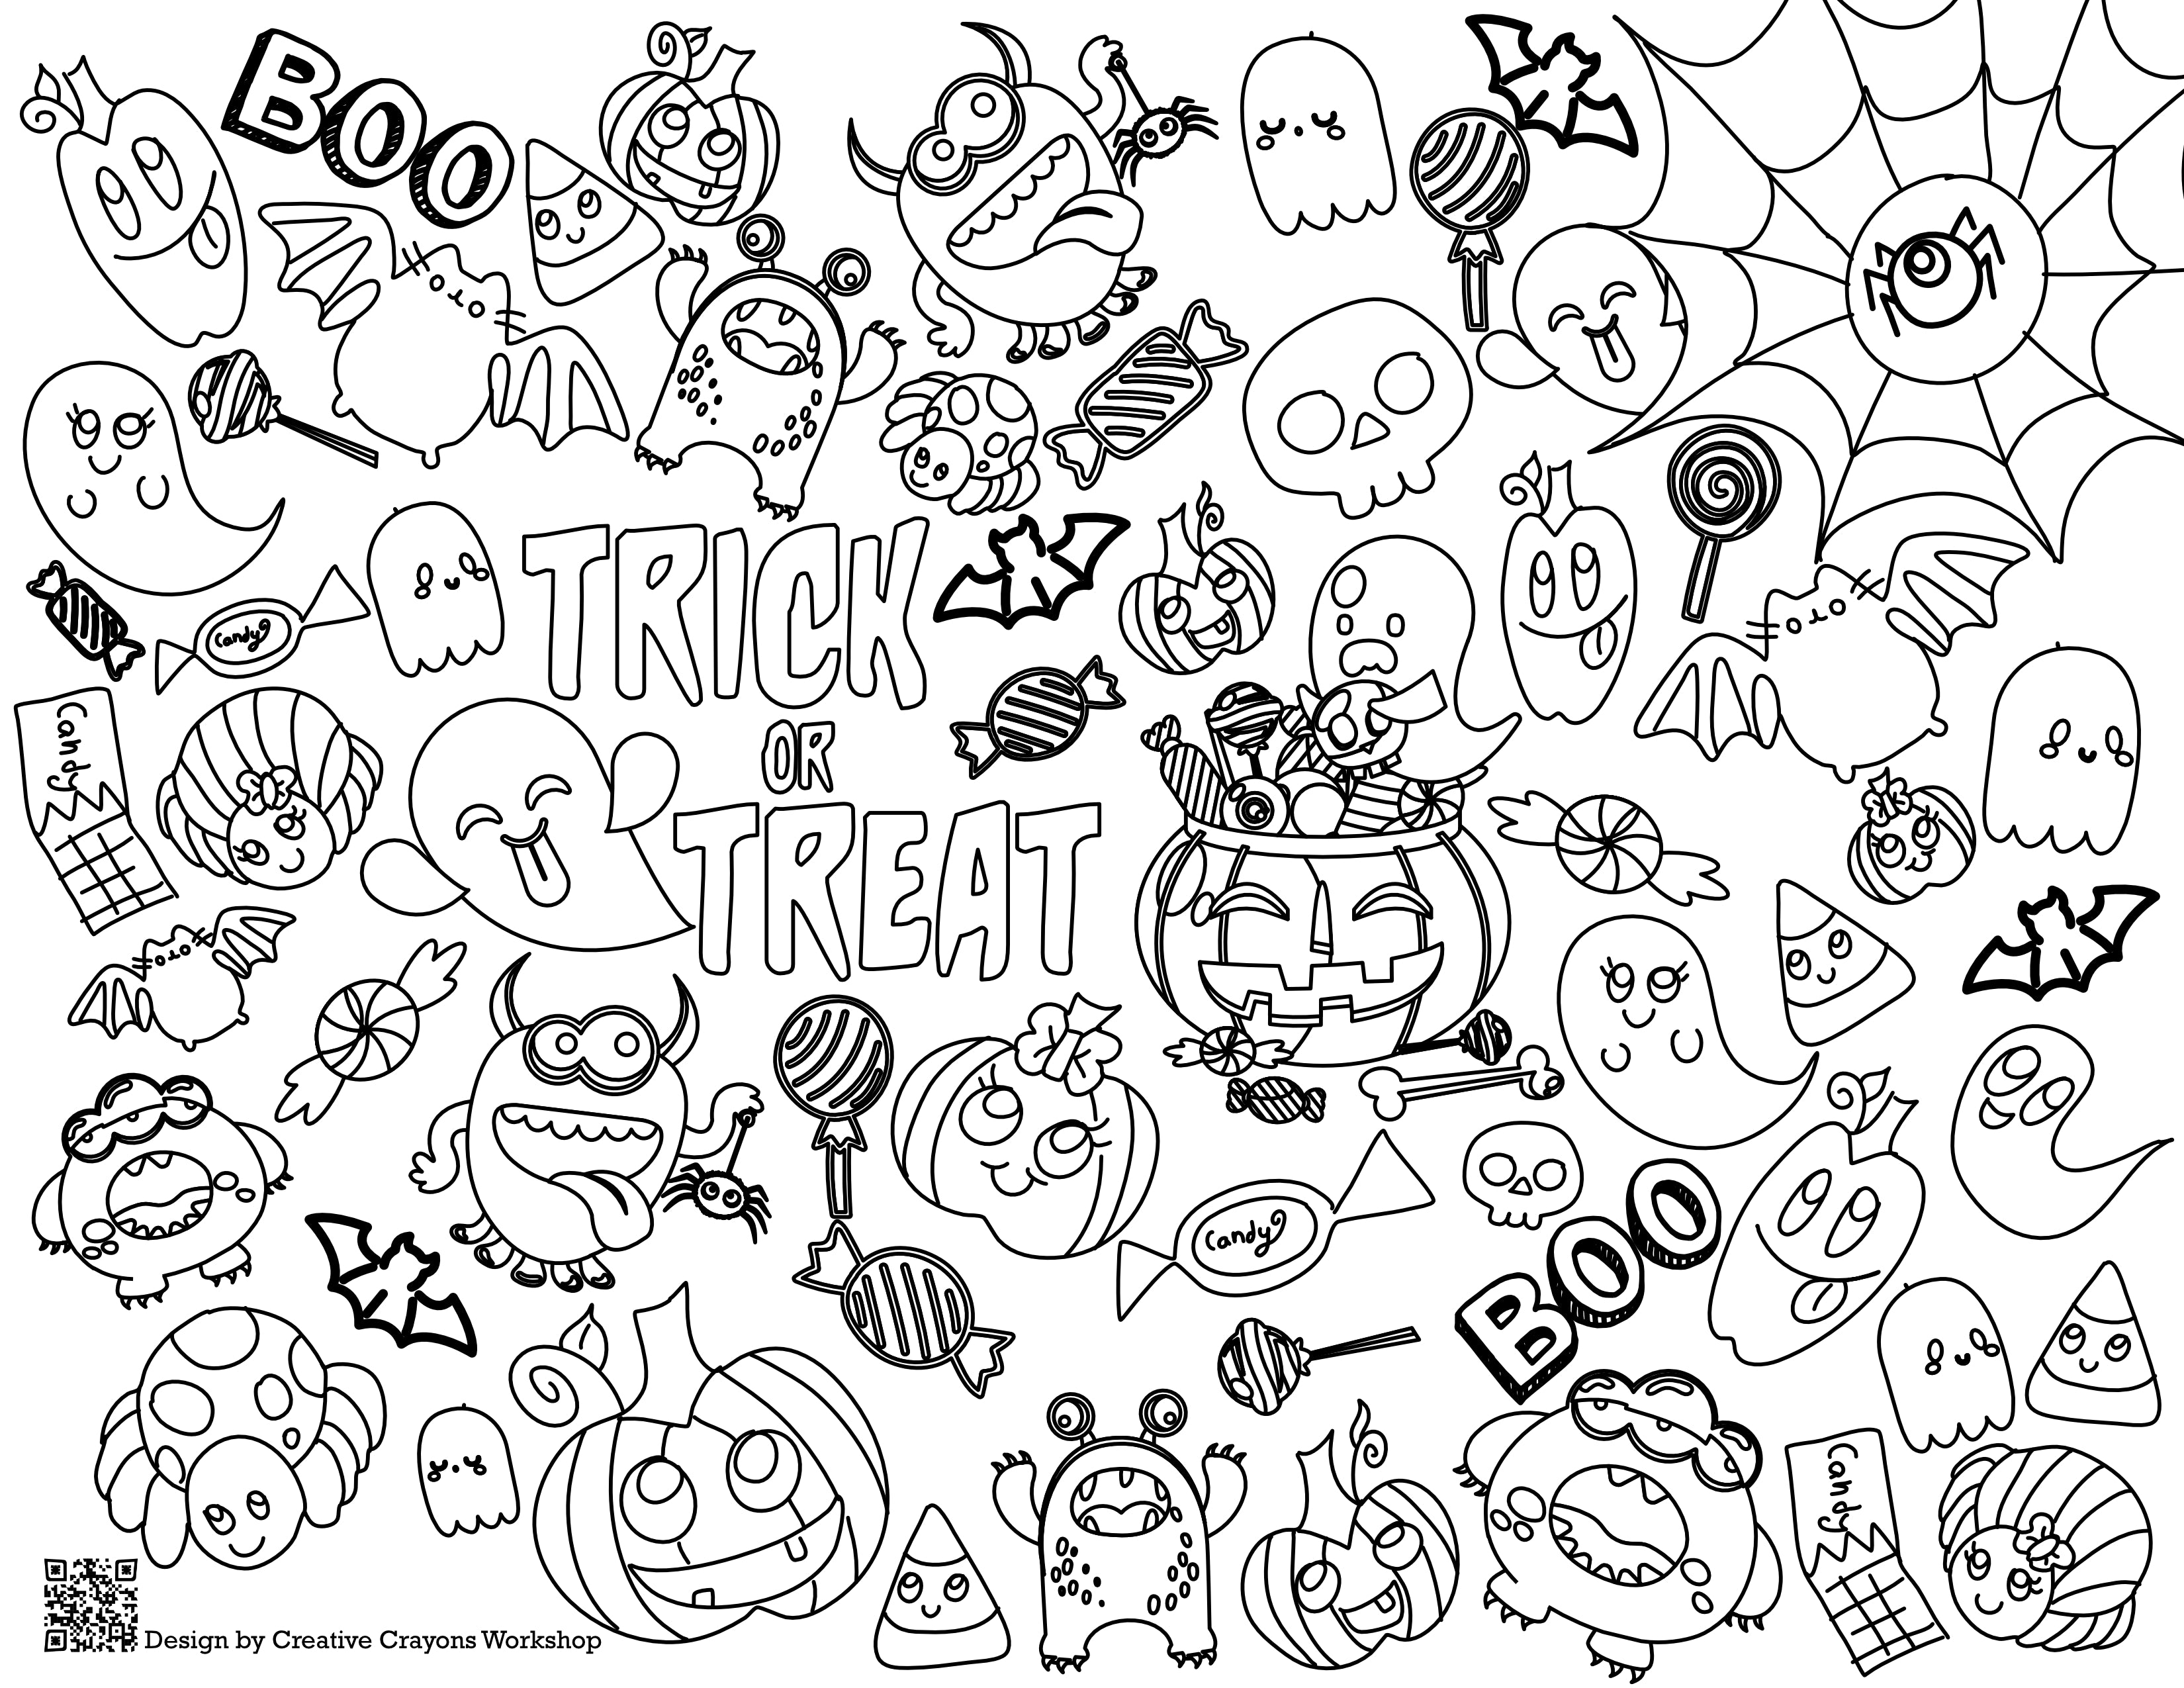 Halloween coloring page â creative crayons workshop